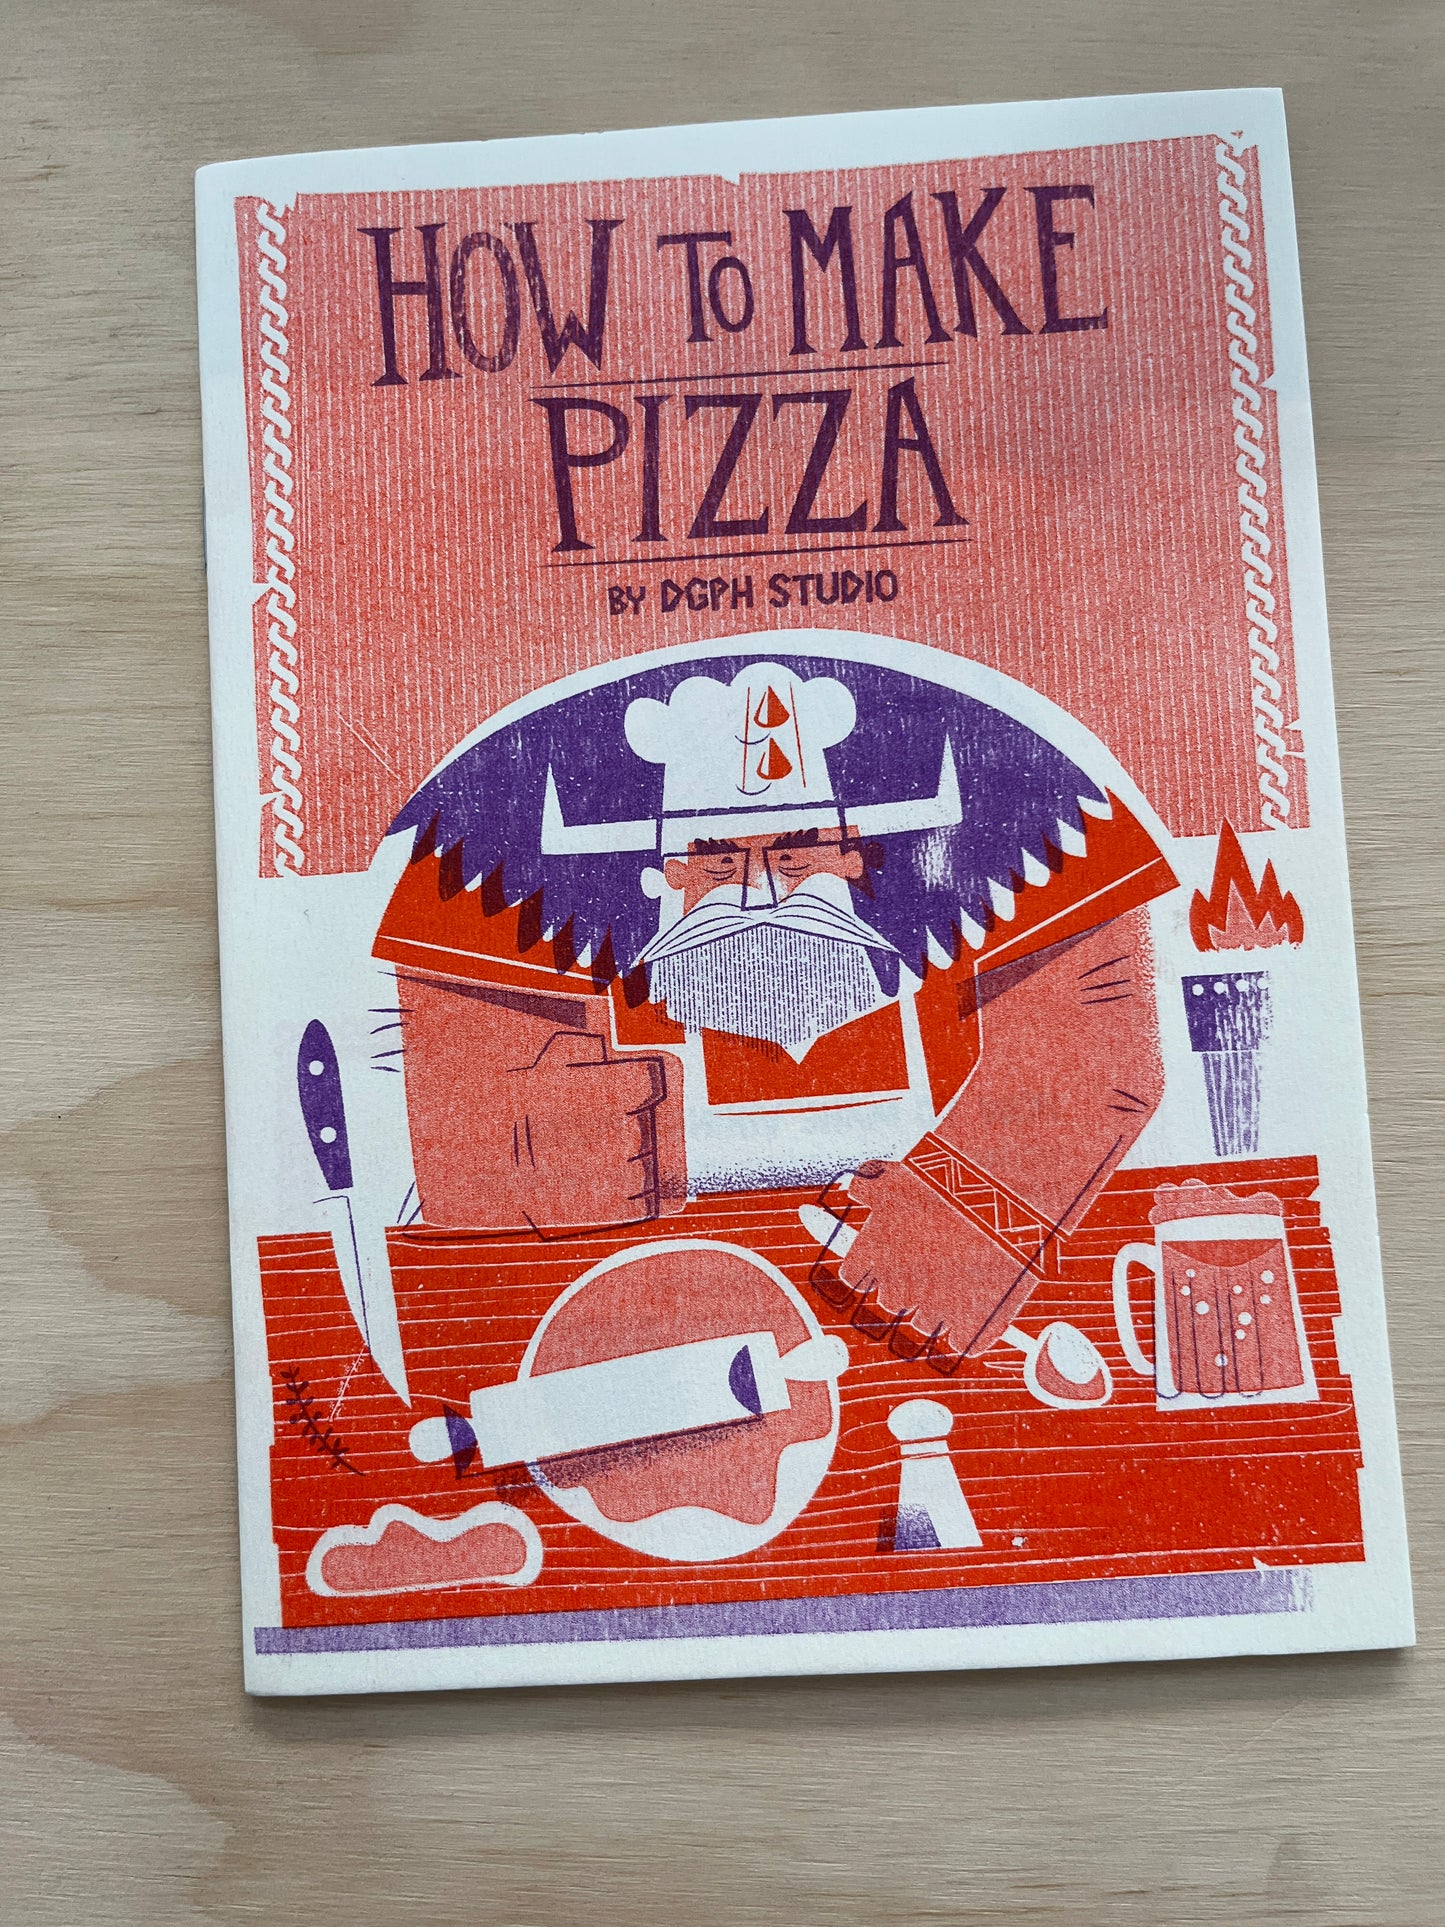 HOW TO MAKE VIKINGS PIZZA